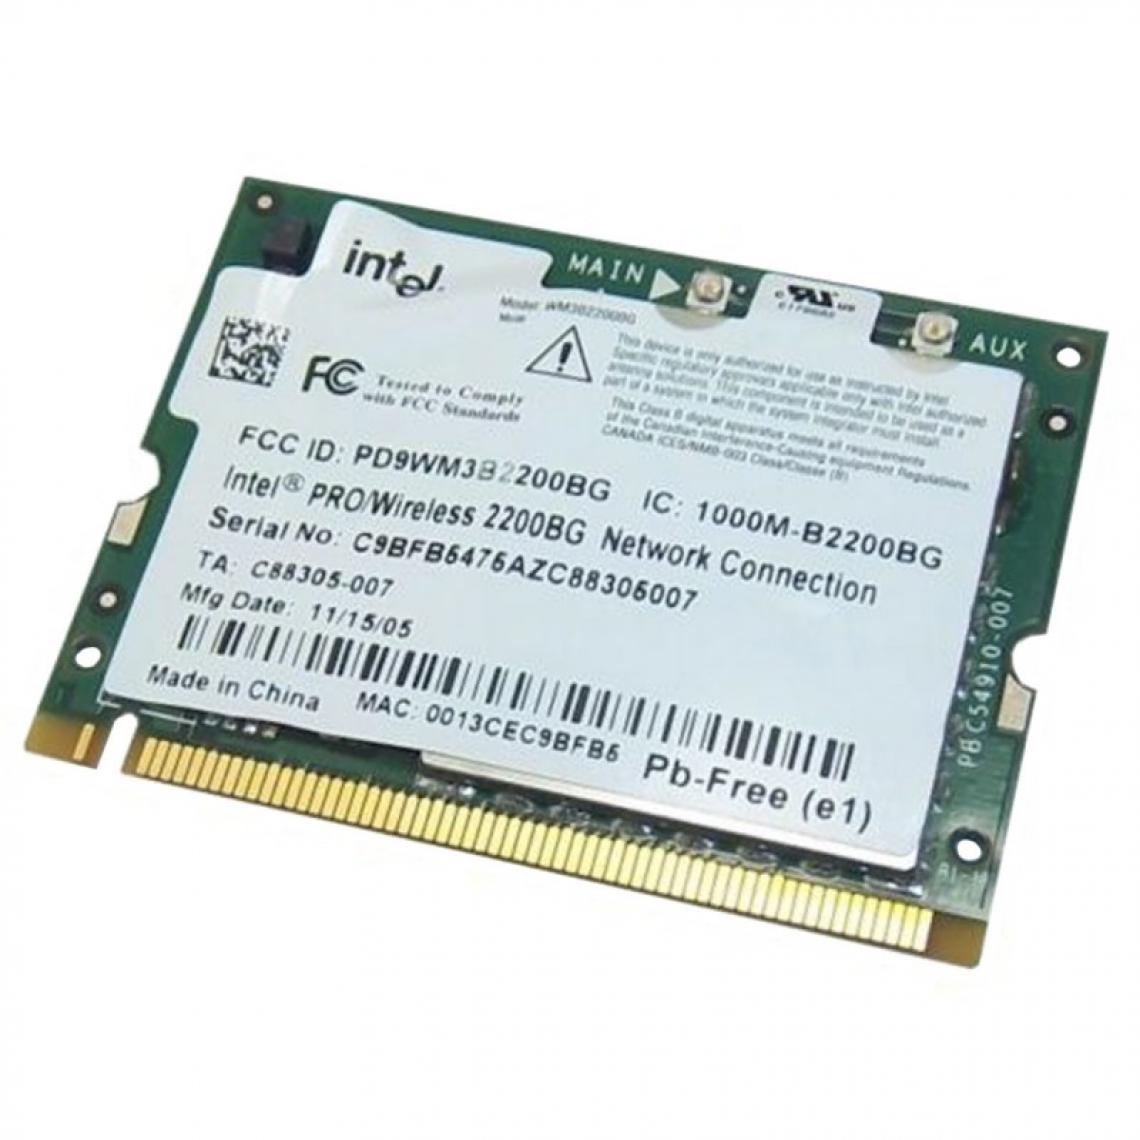 Intel - Mini-Carte Wifi Intel PRO 2200BG WM3B2200BG 0677-04-2327 PCI-e 802.11b/g WLAN - Carte réseau